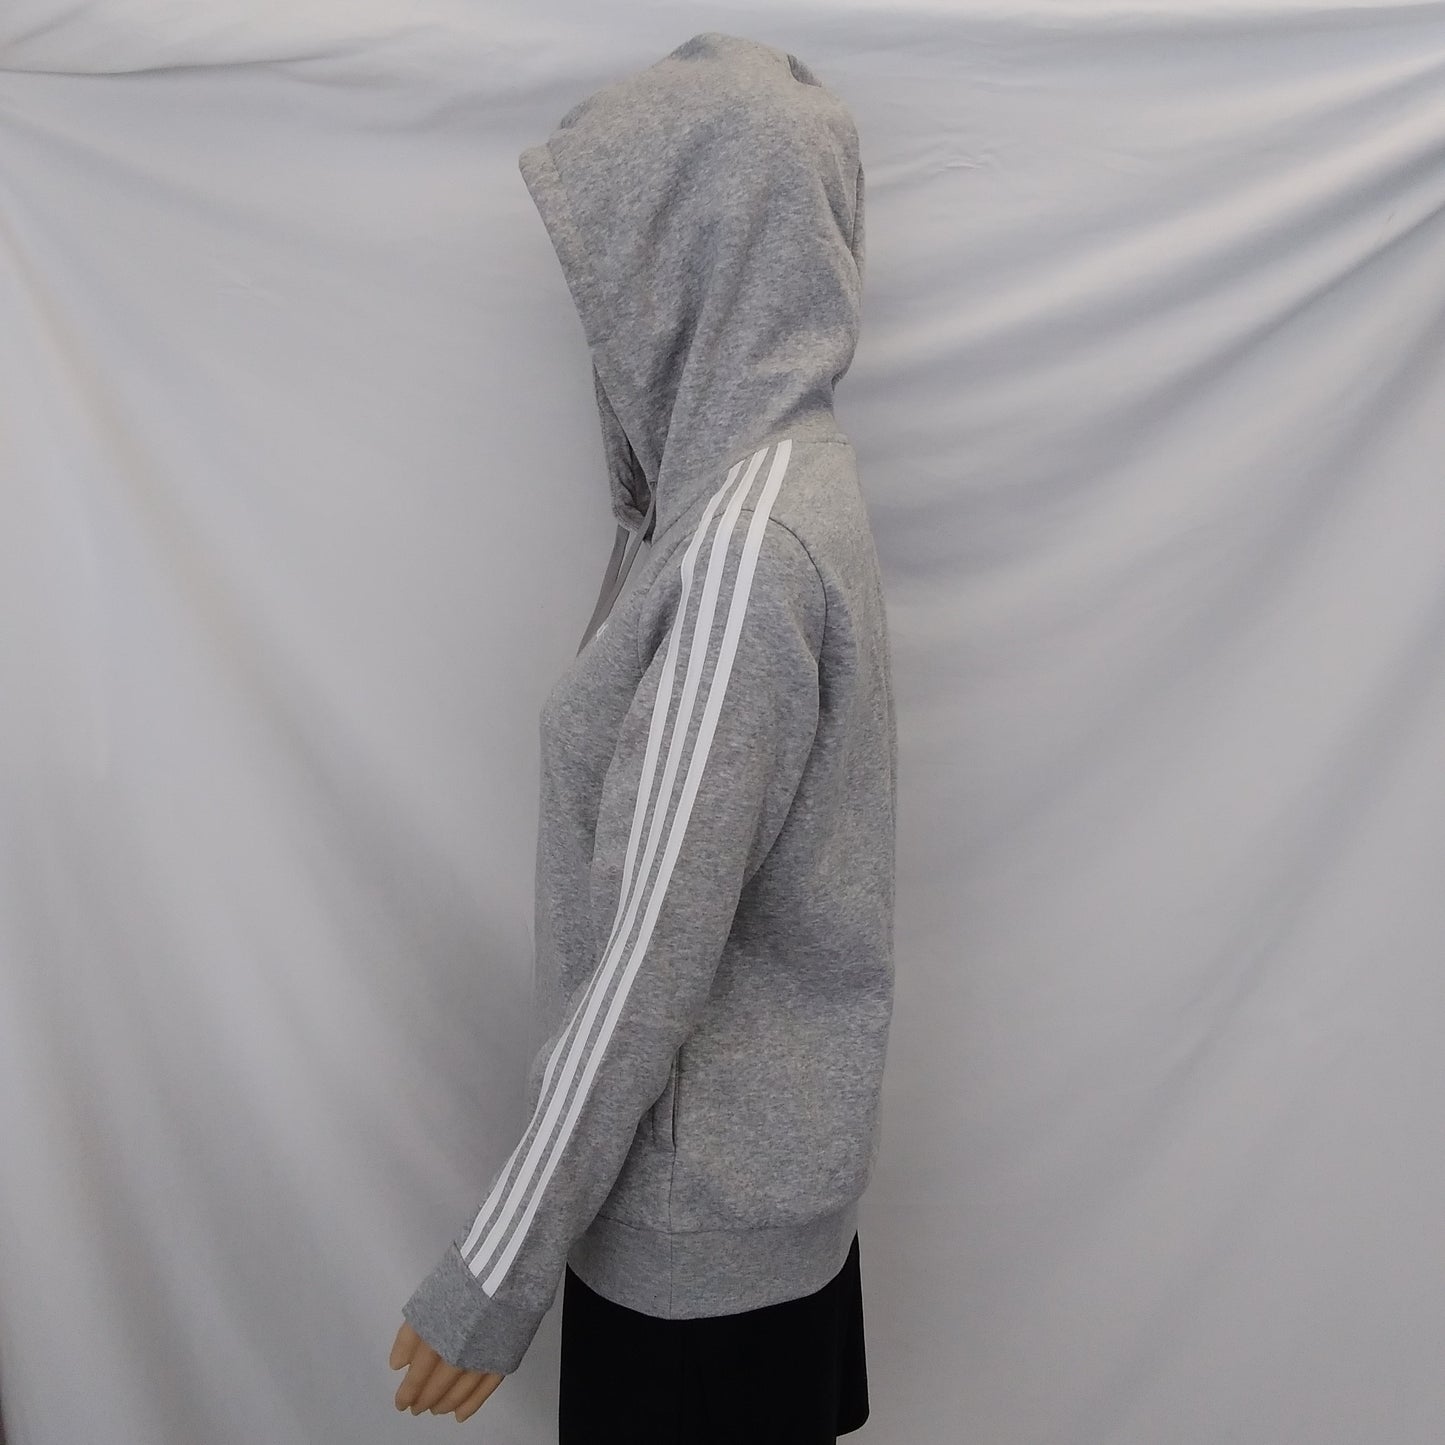 NWT - Adidas gray Hooded Sweatshirt - M